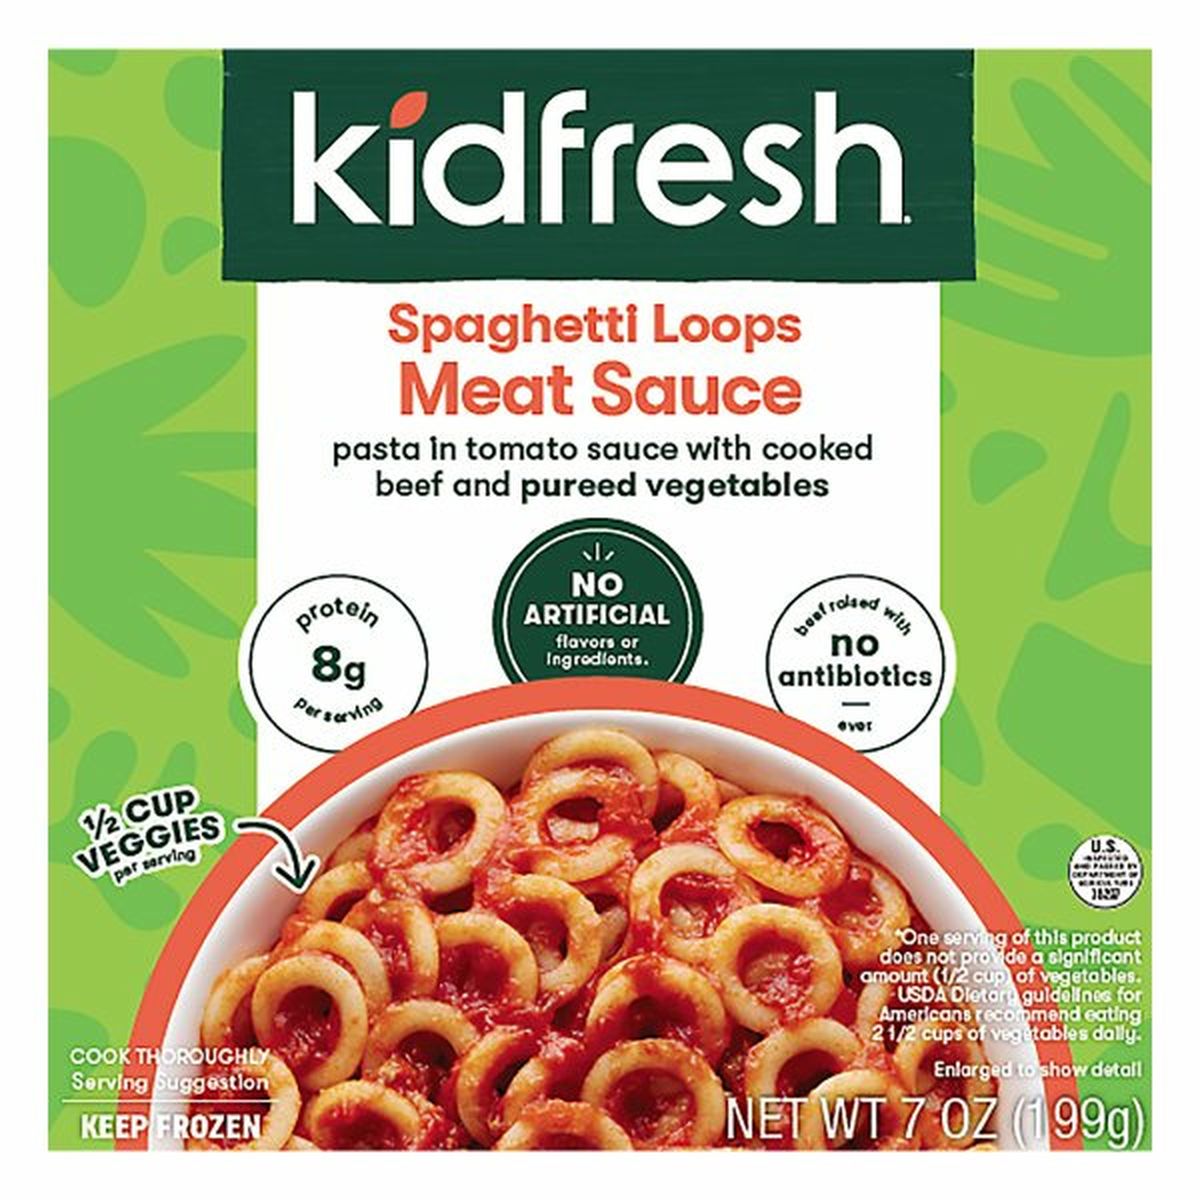 Calories in Kidfresh Meat Sauce, Spaghetti Loops